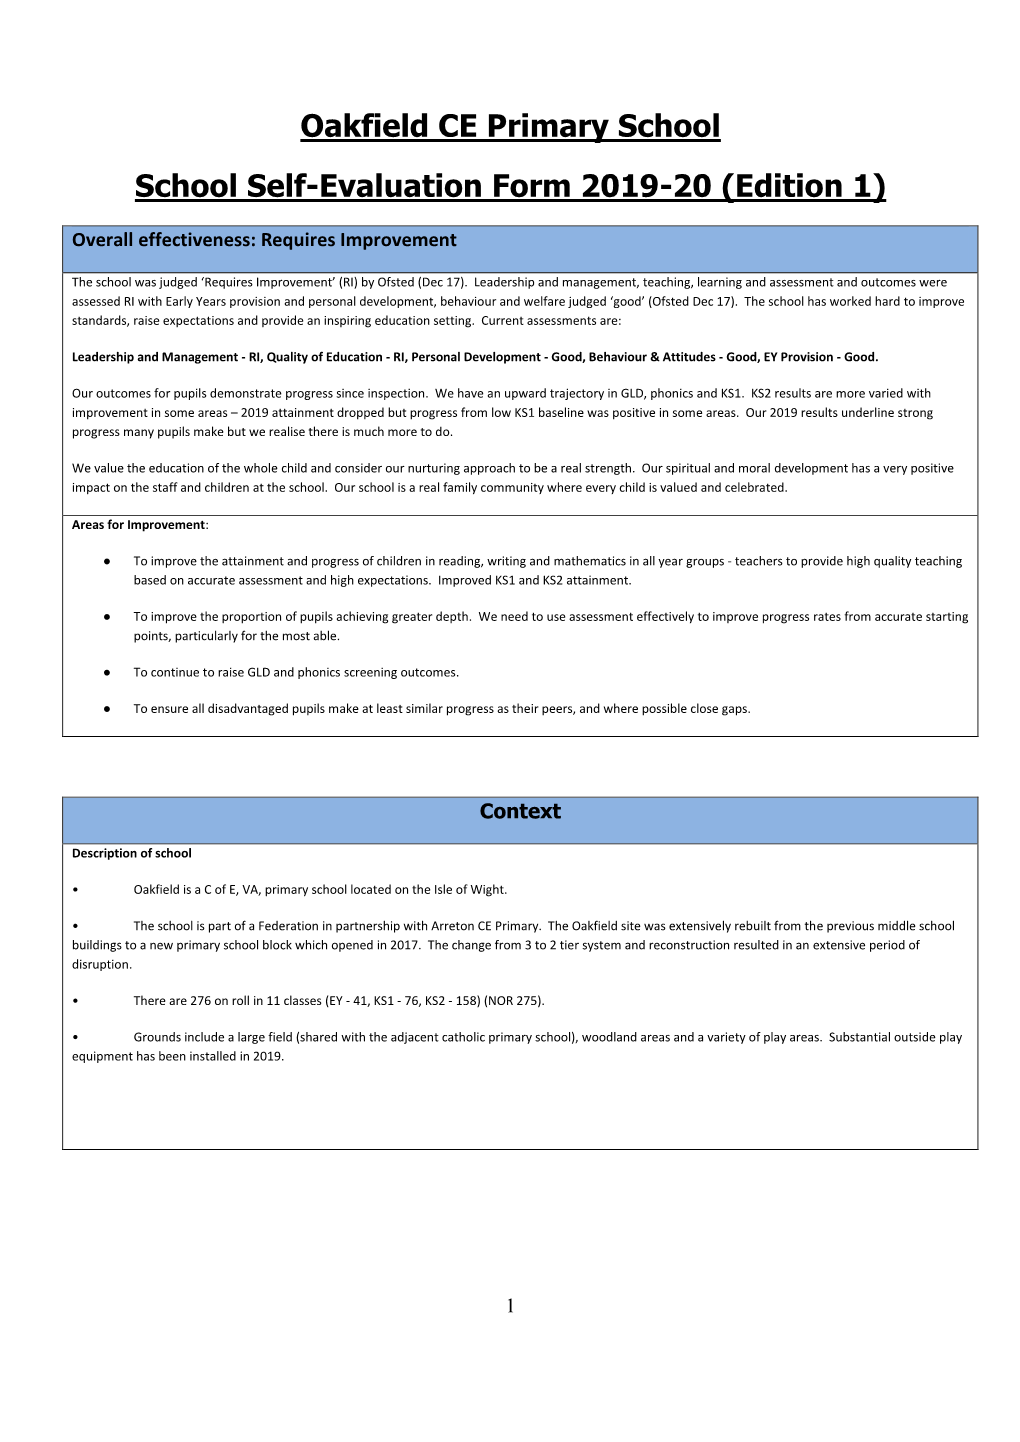 Oakfield CE Primary School School Self-Evaluation Form 2019-20 (Edition 1)